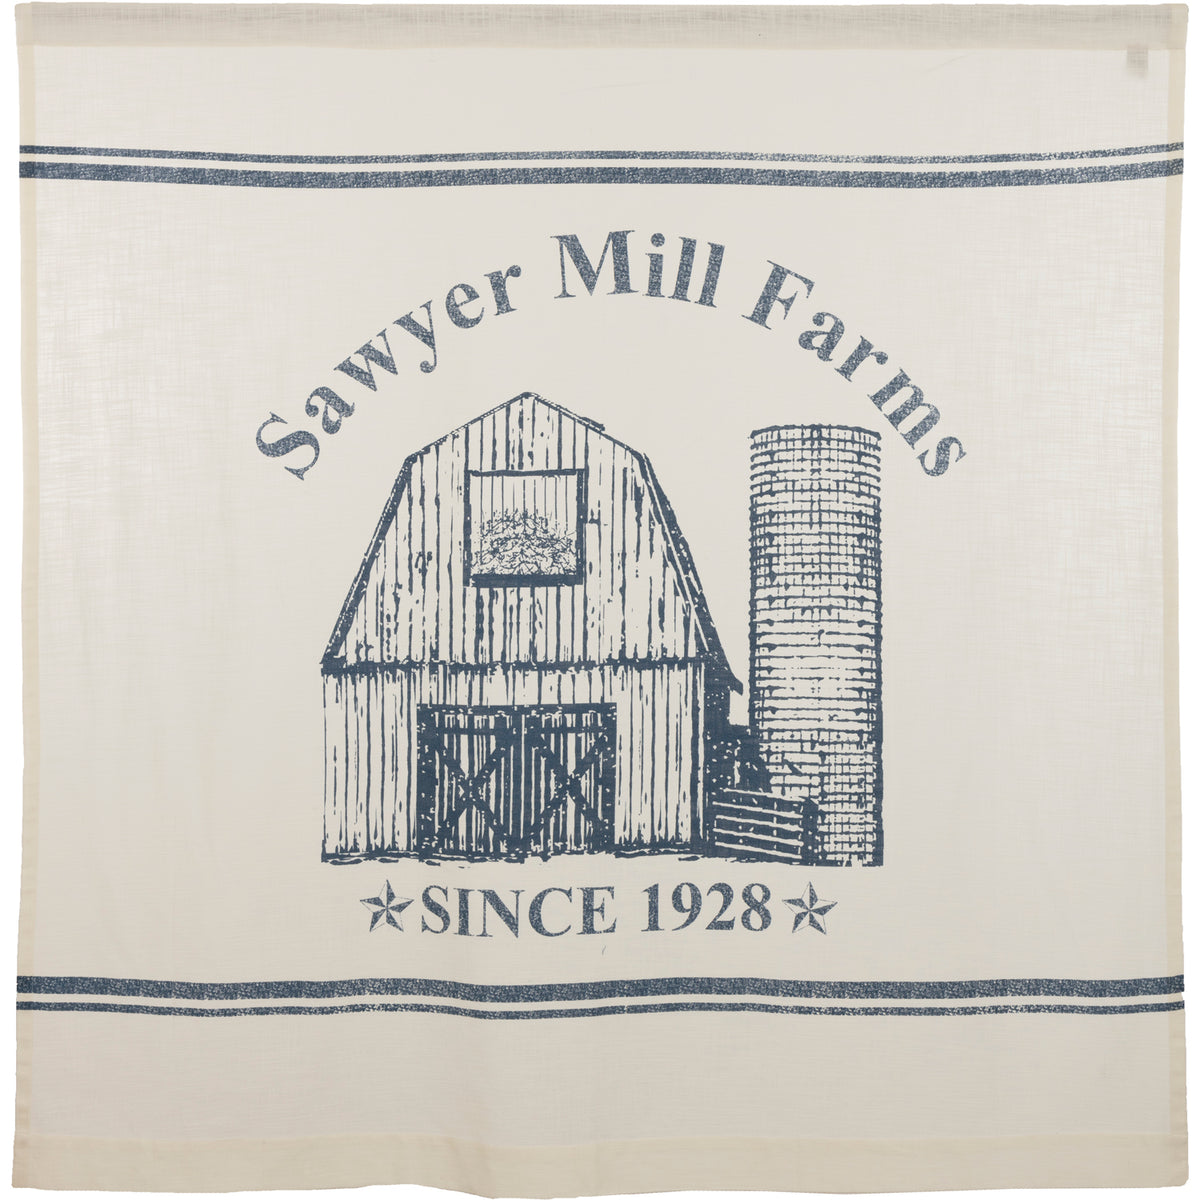 Sawyer Mill Blue Barn Shower Curtain 72x72